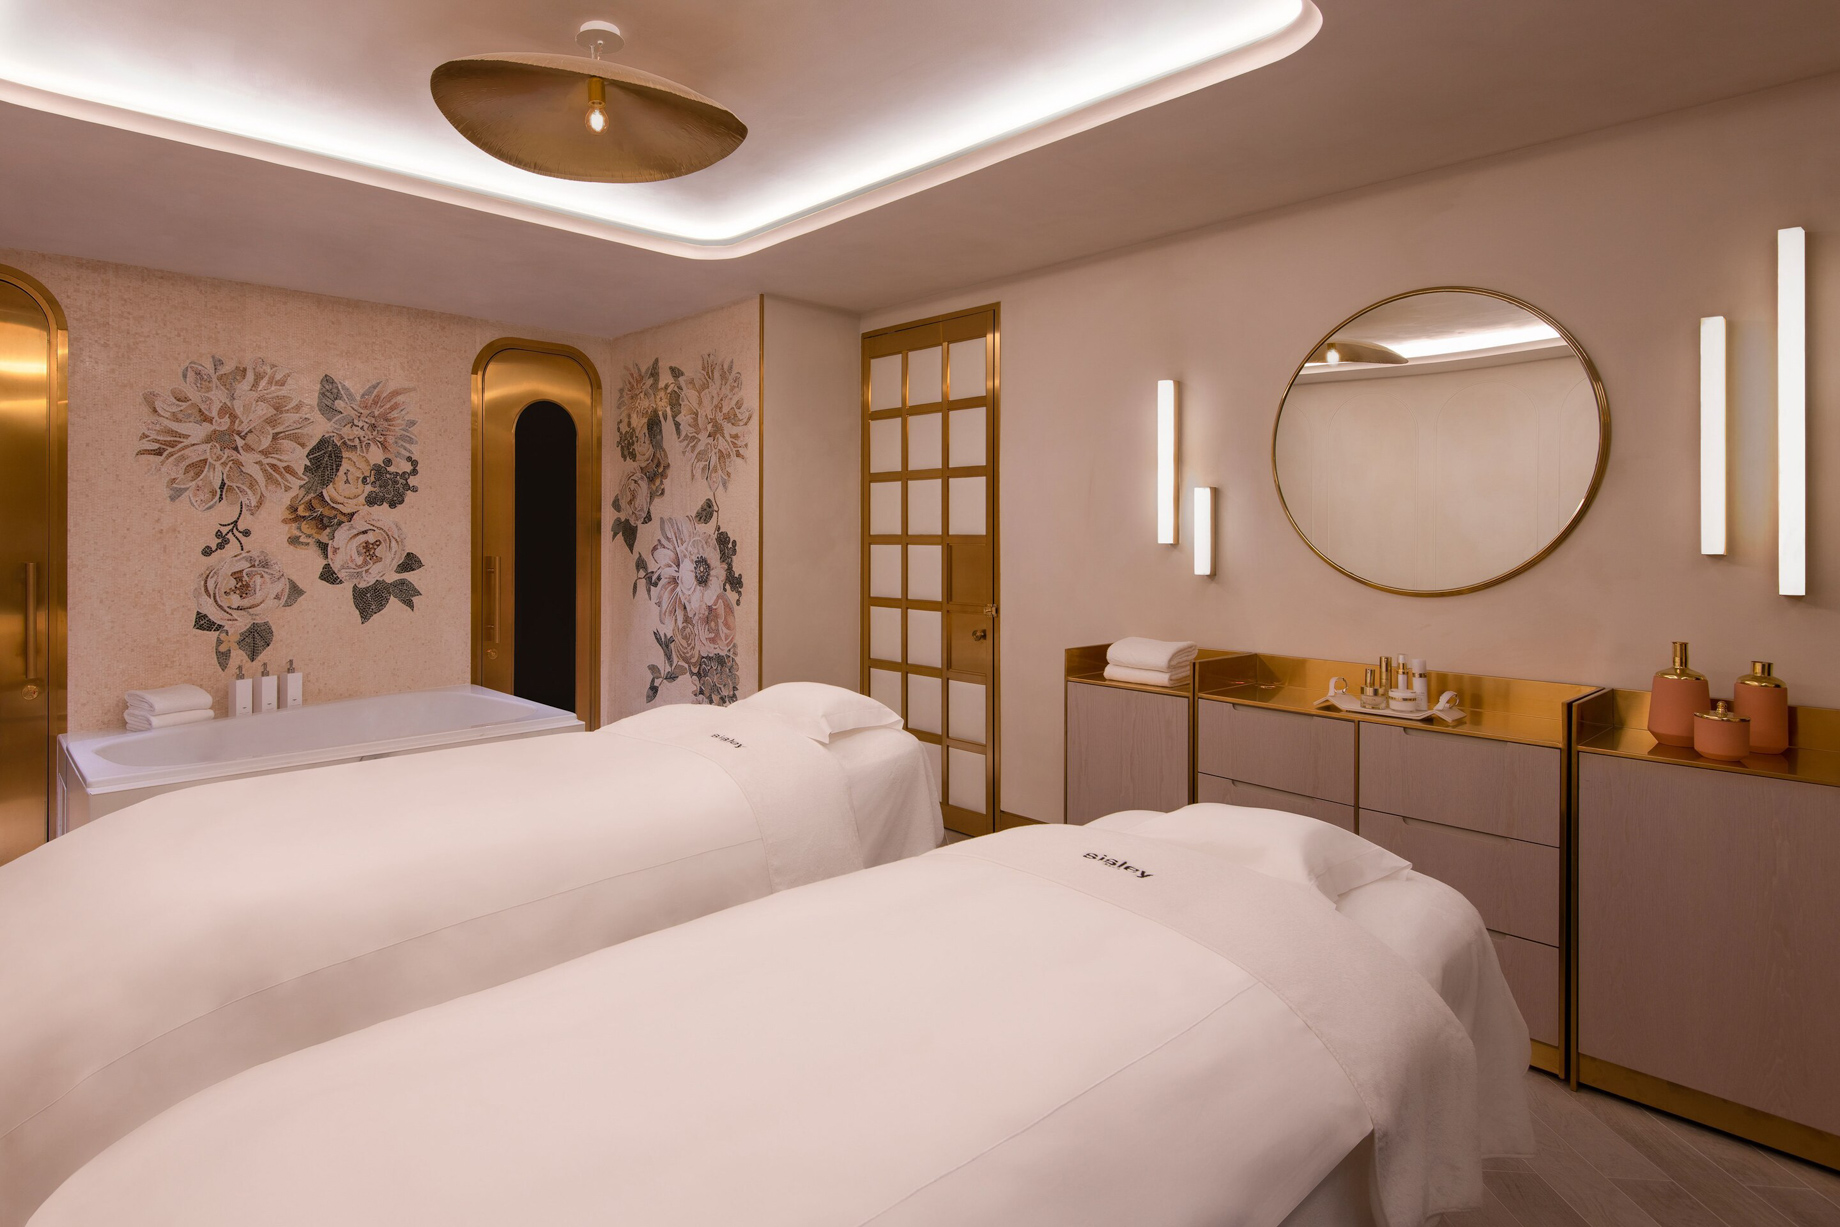 W Doha Hotel – Doha, Qatar – Sisley Paris Spa VIP Treatment Room